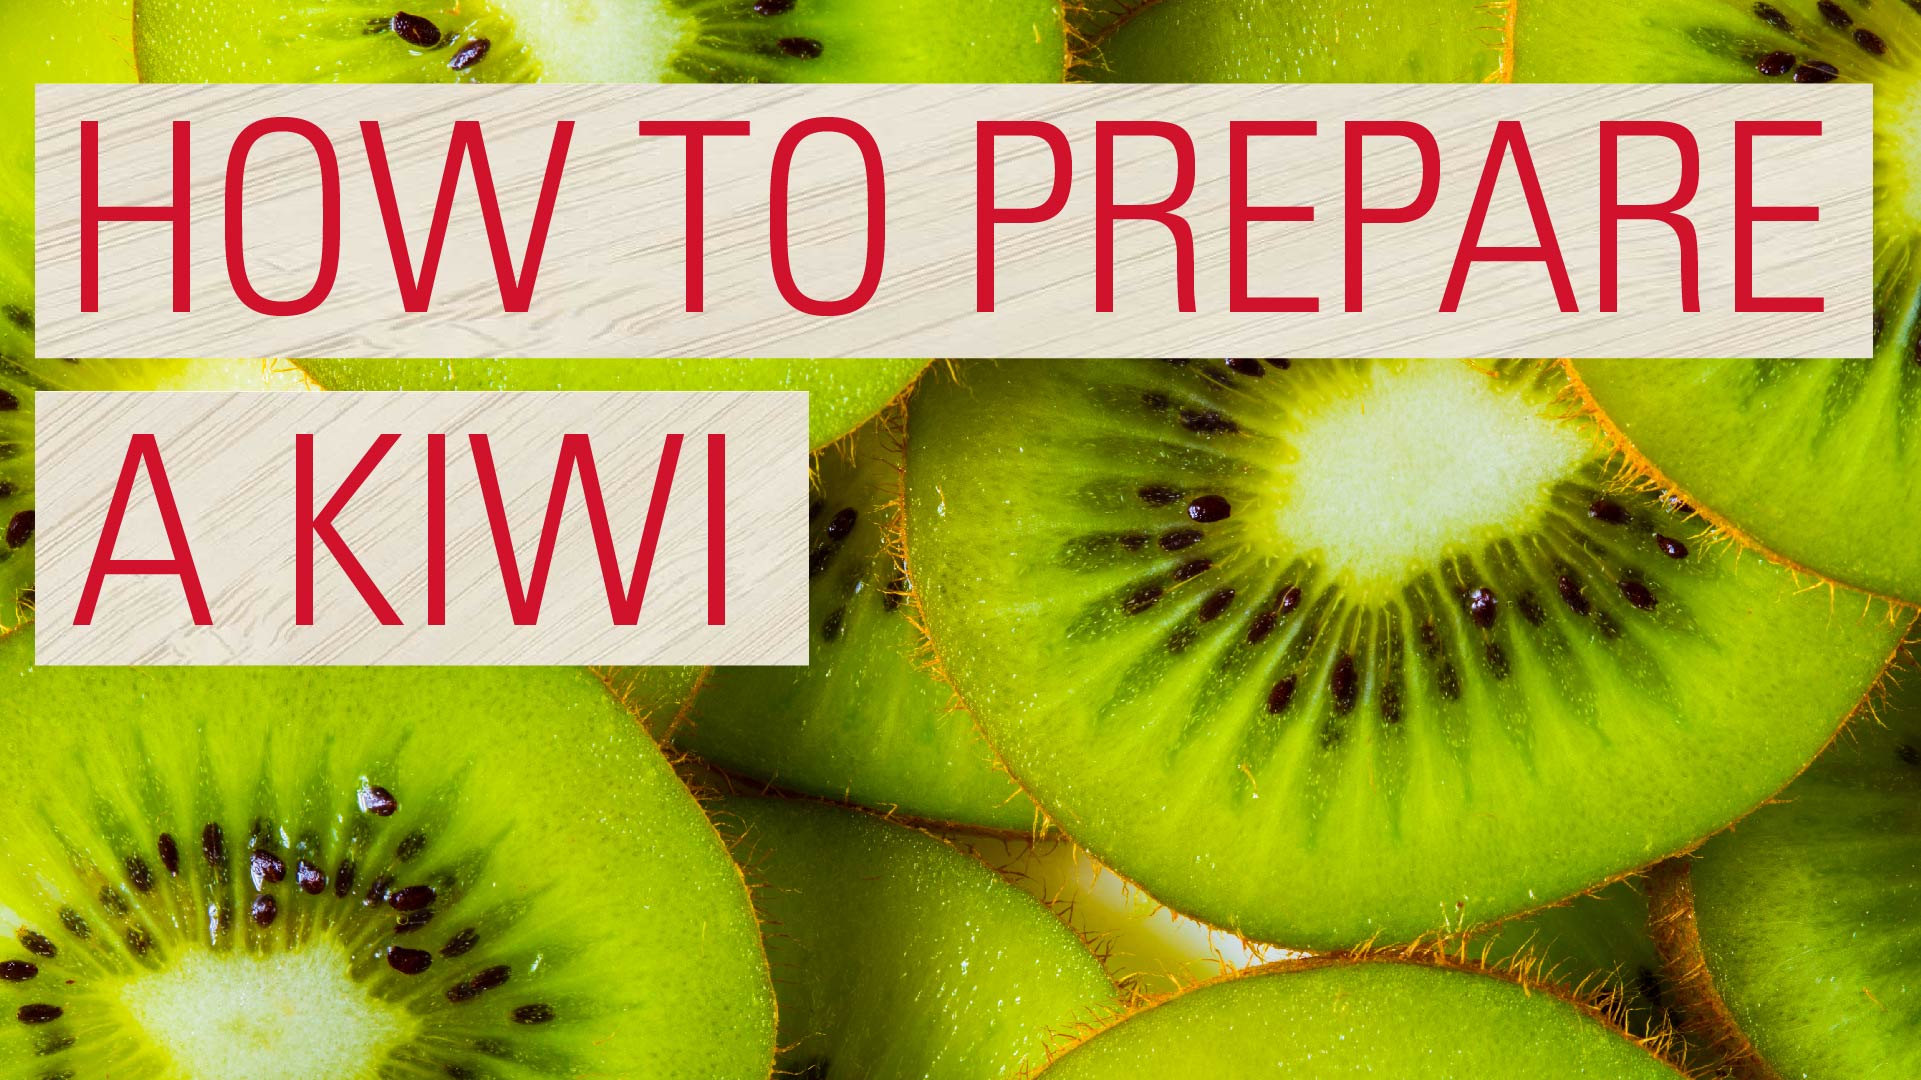 how to prepare a kiwi